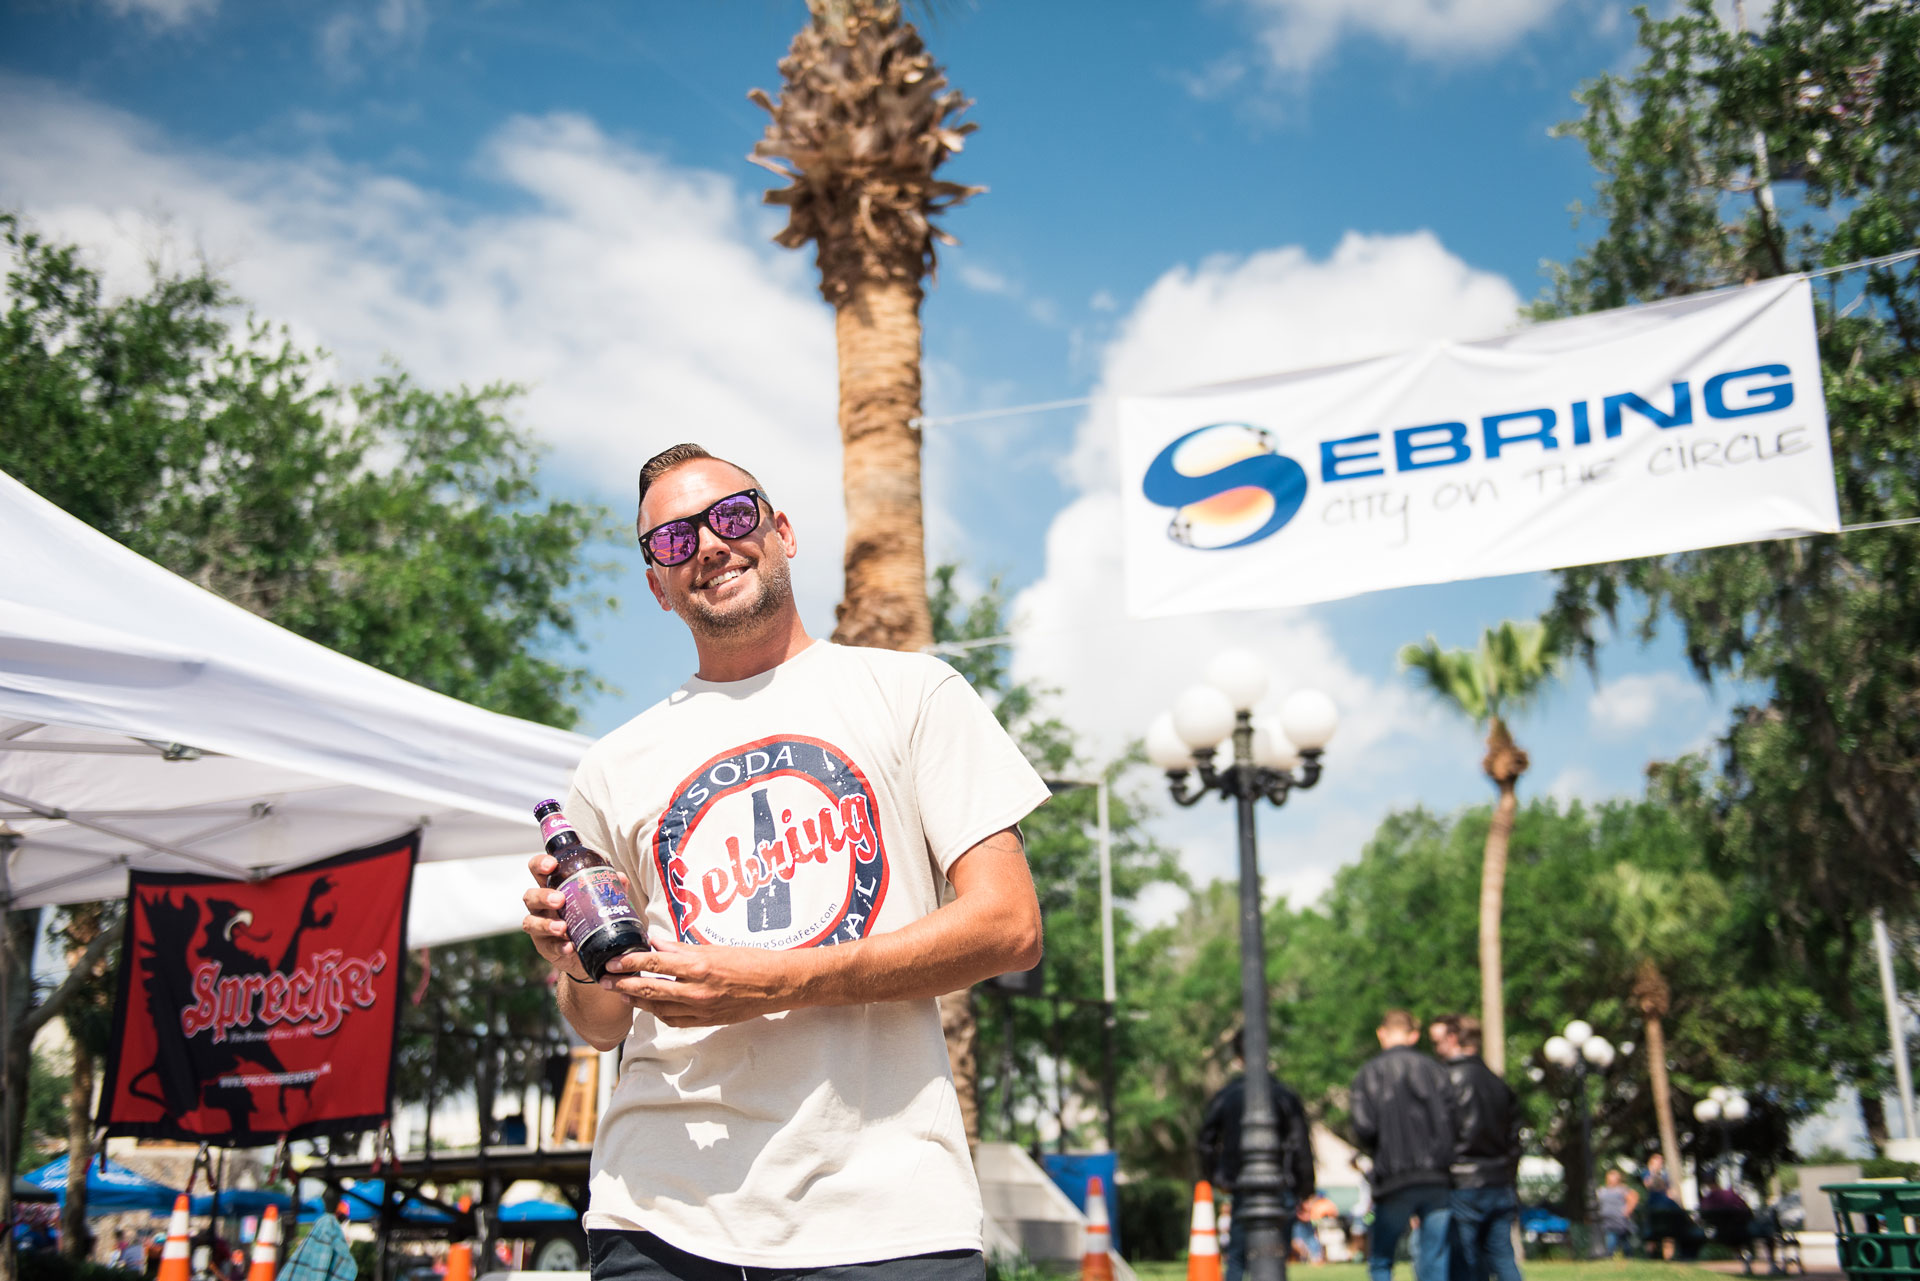 A man holding a soda at the Sebring Soda Festival.